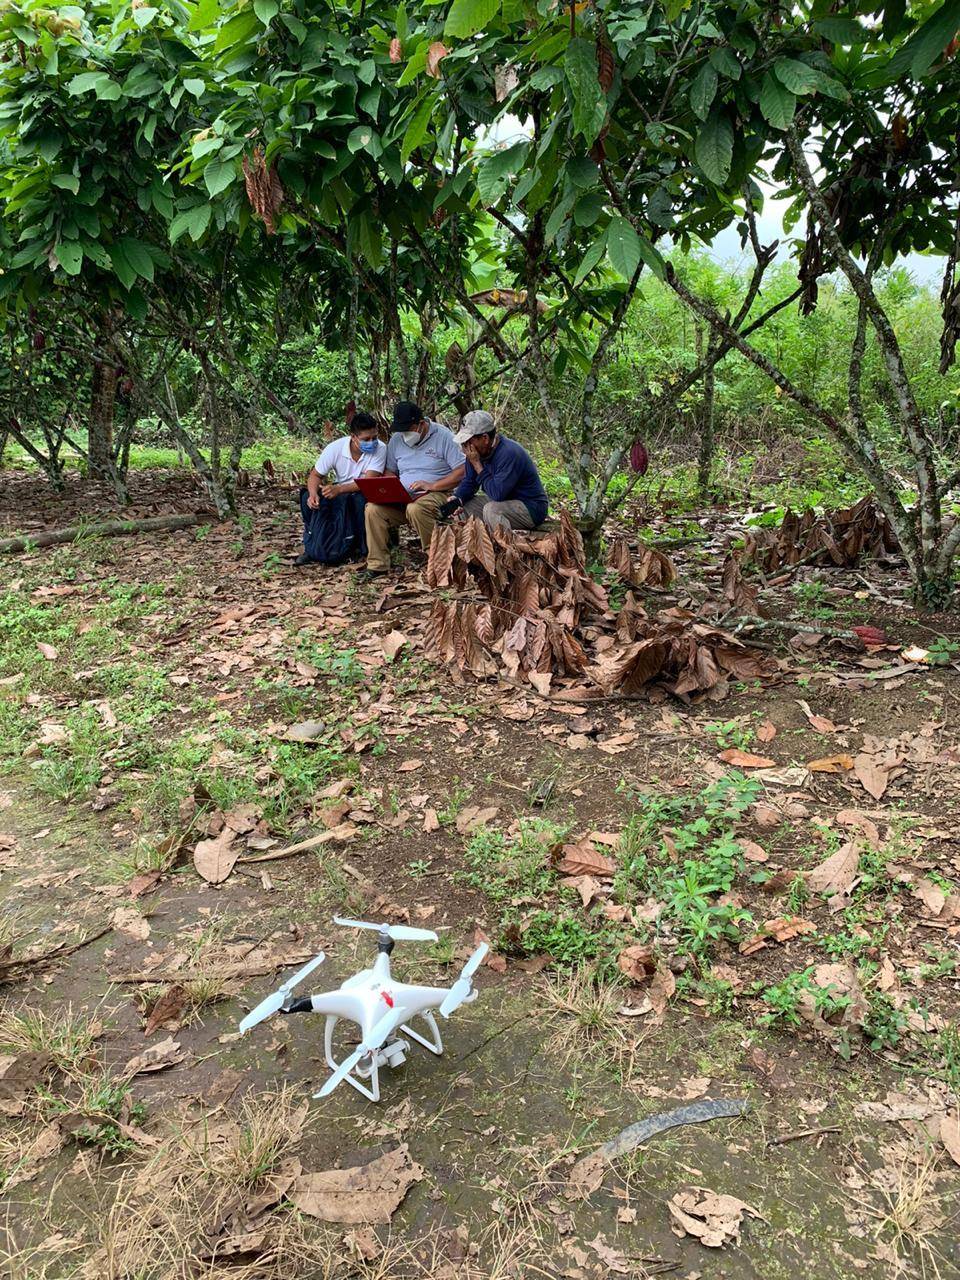 Farm mapping was undertaken by drone technology